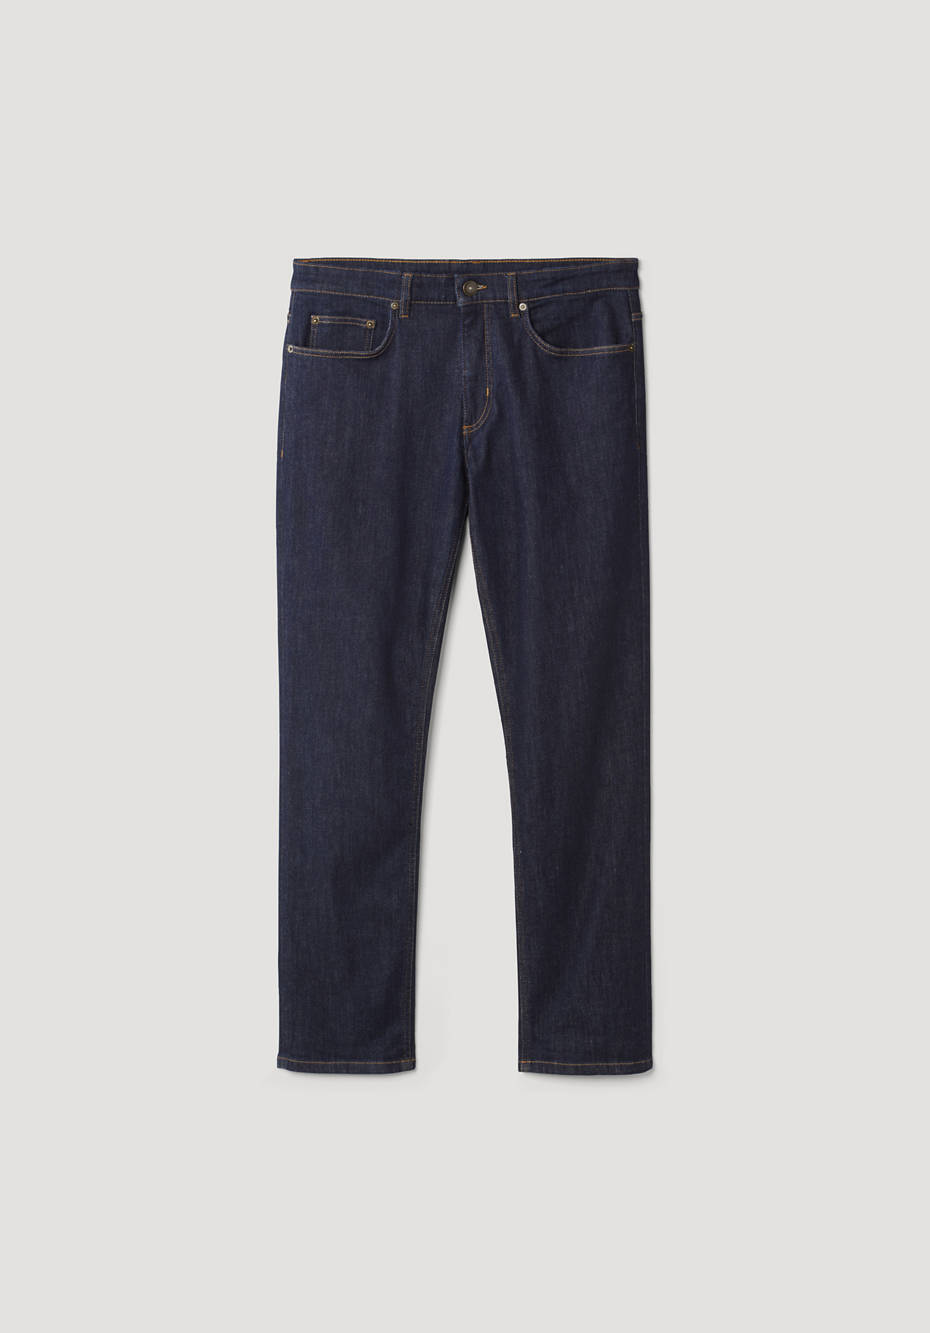 Herren Jeans Jeanshose Casual Hose Straight Cut gerades Bein 5 Pocket Style 